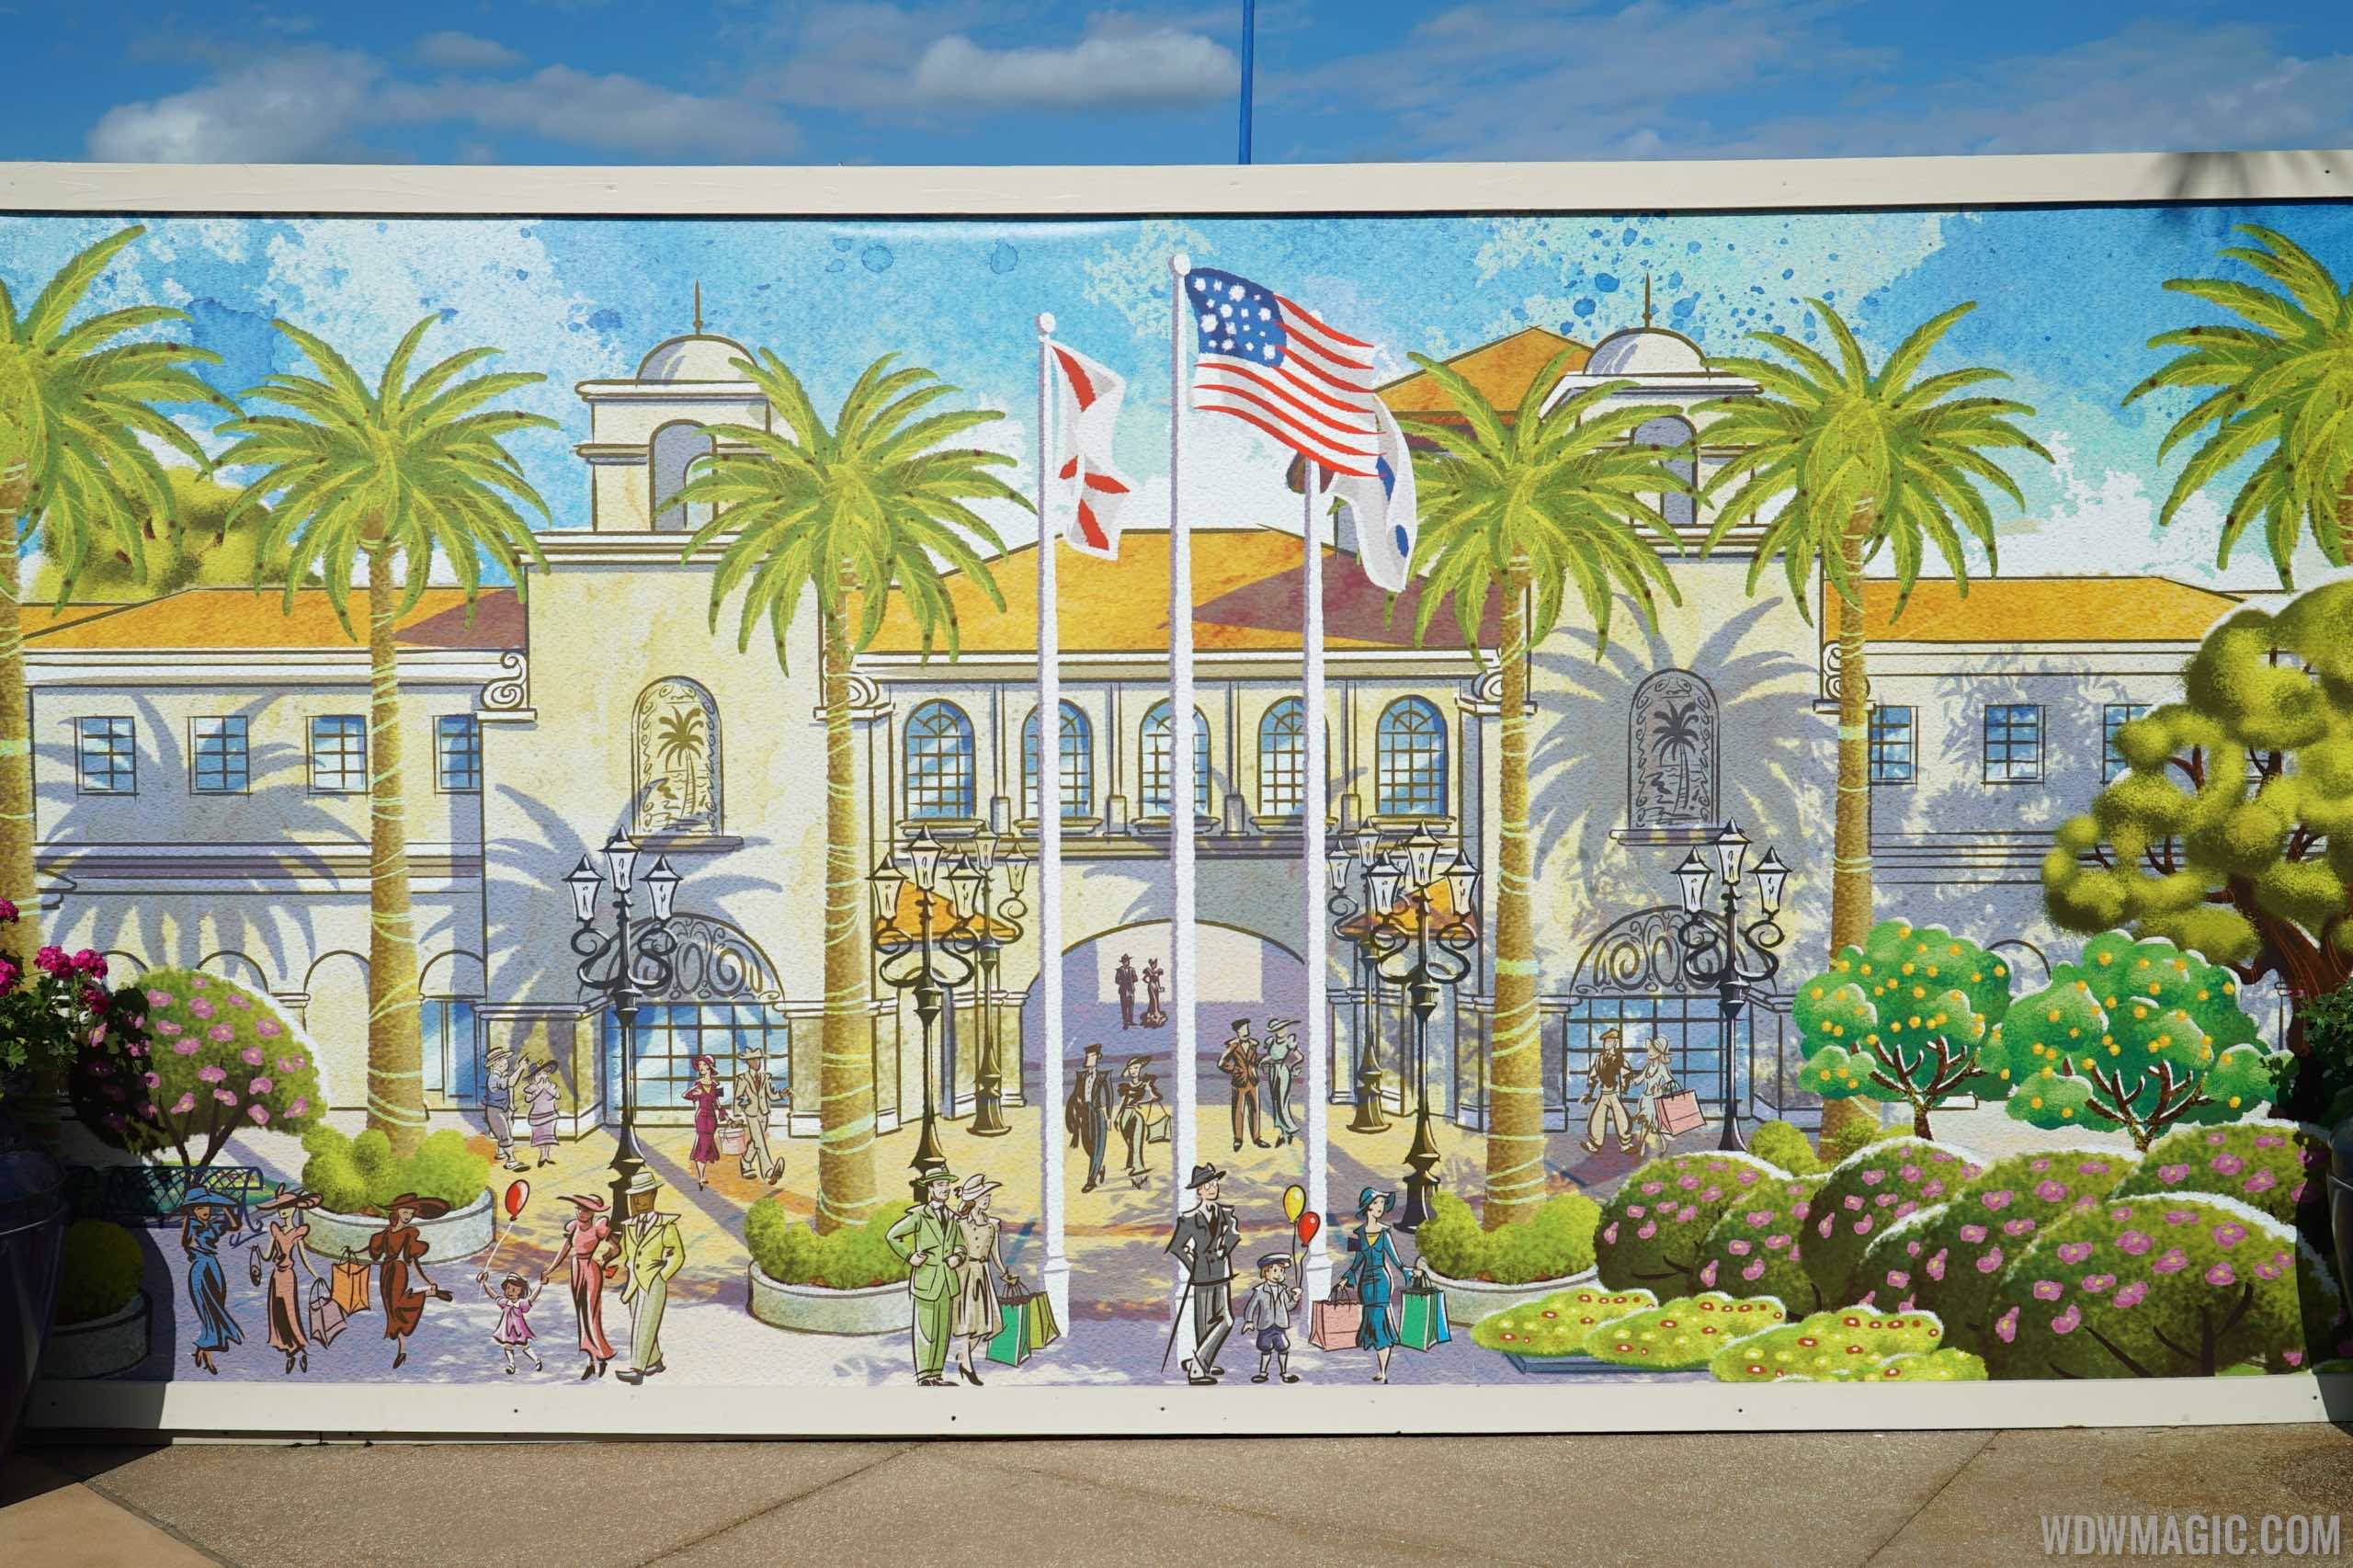 PHOTOS - New Disney Springs concept art shows more of the Town Center